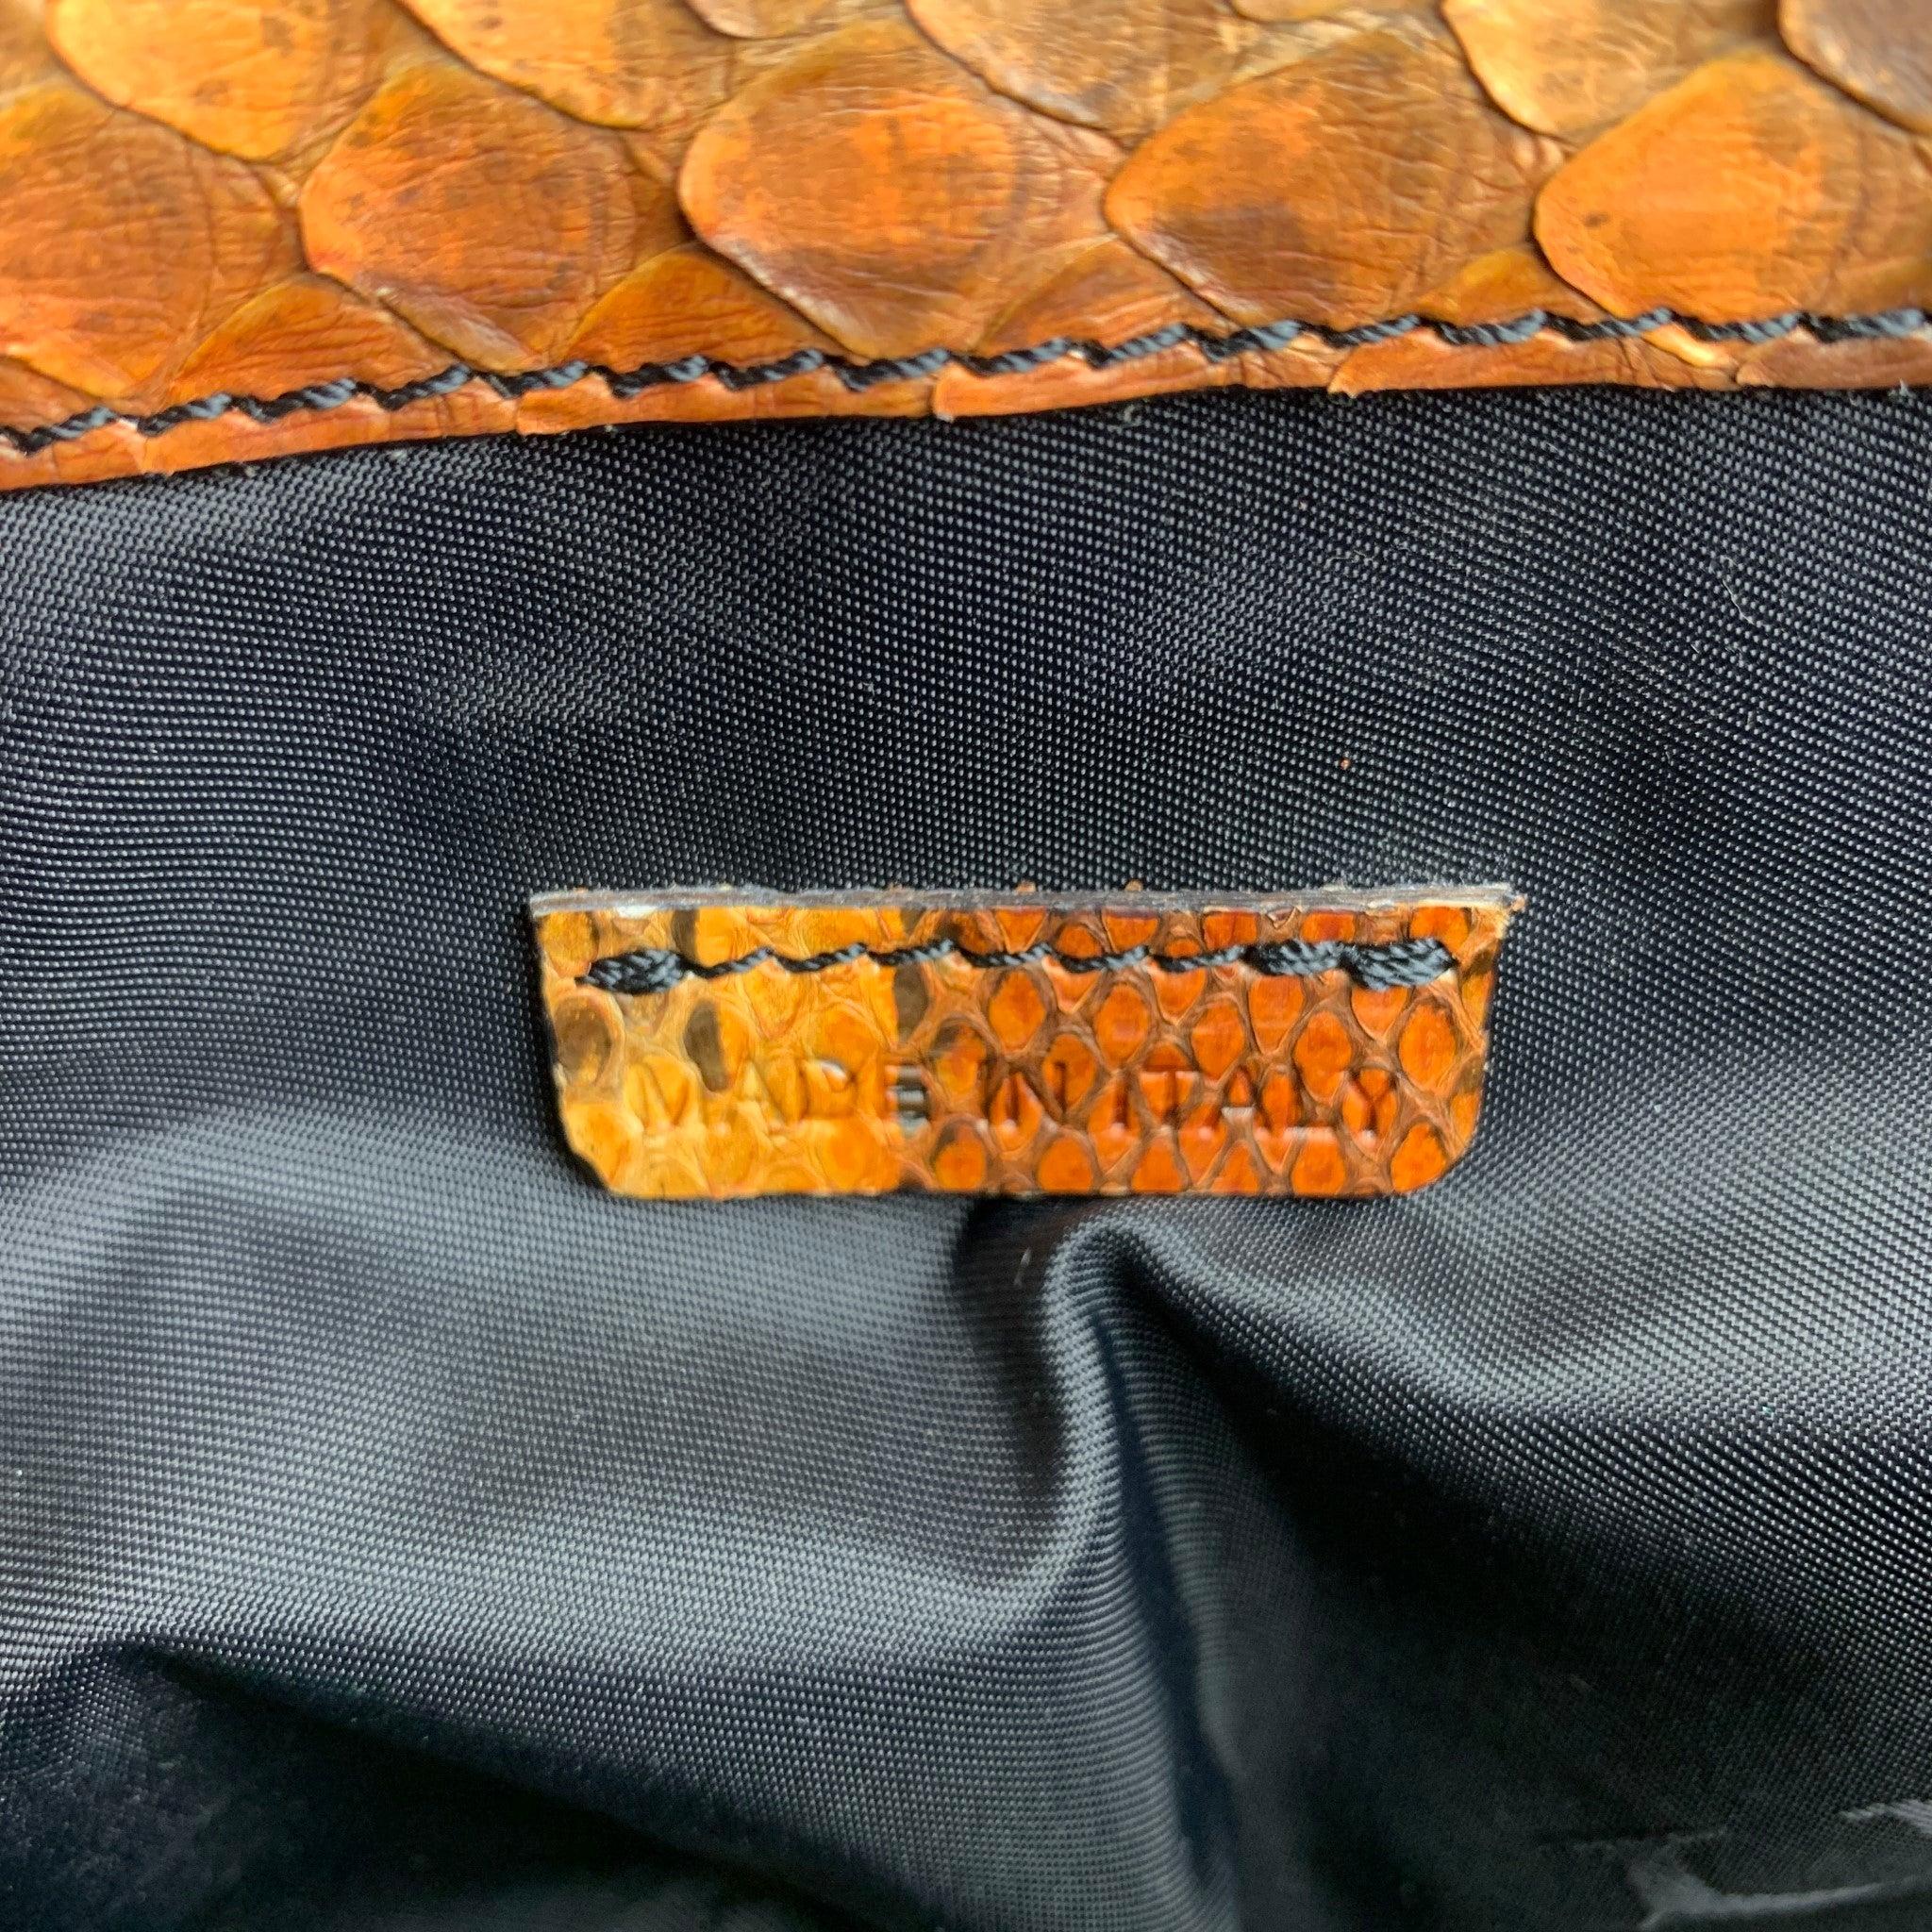 BURBERRY PRORSUM Brown & Tan Python Skin Leather Clutch Shoulder Bag For Sale 4